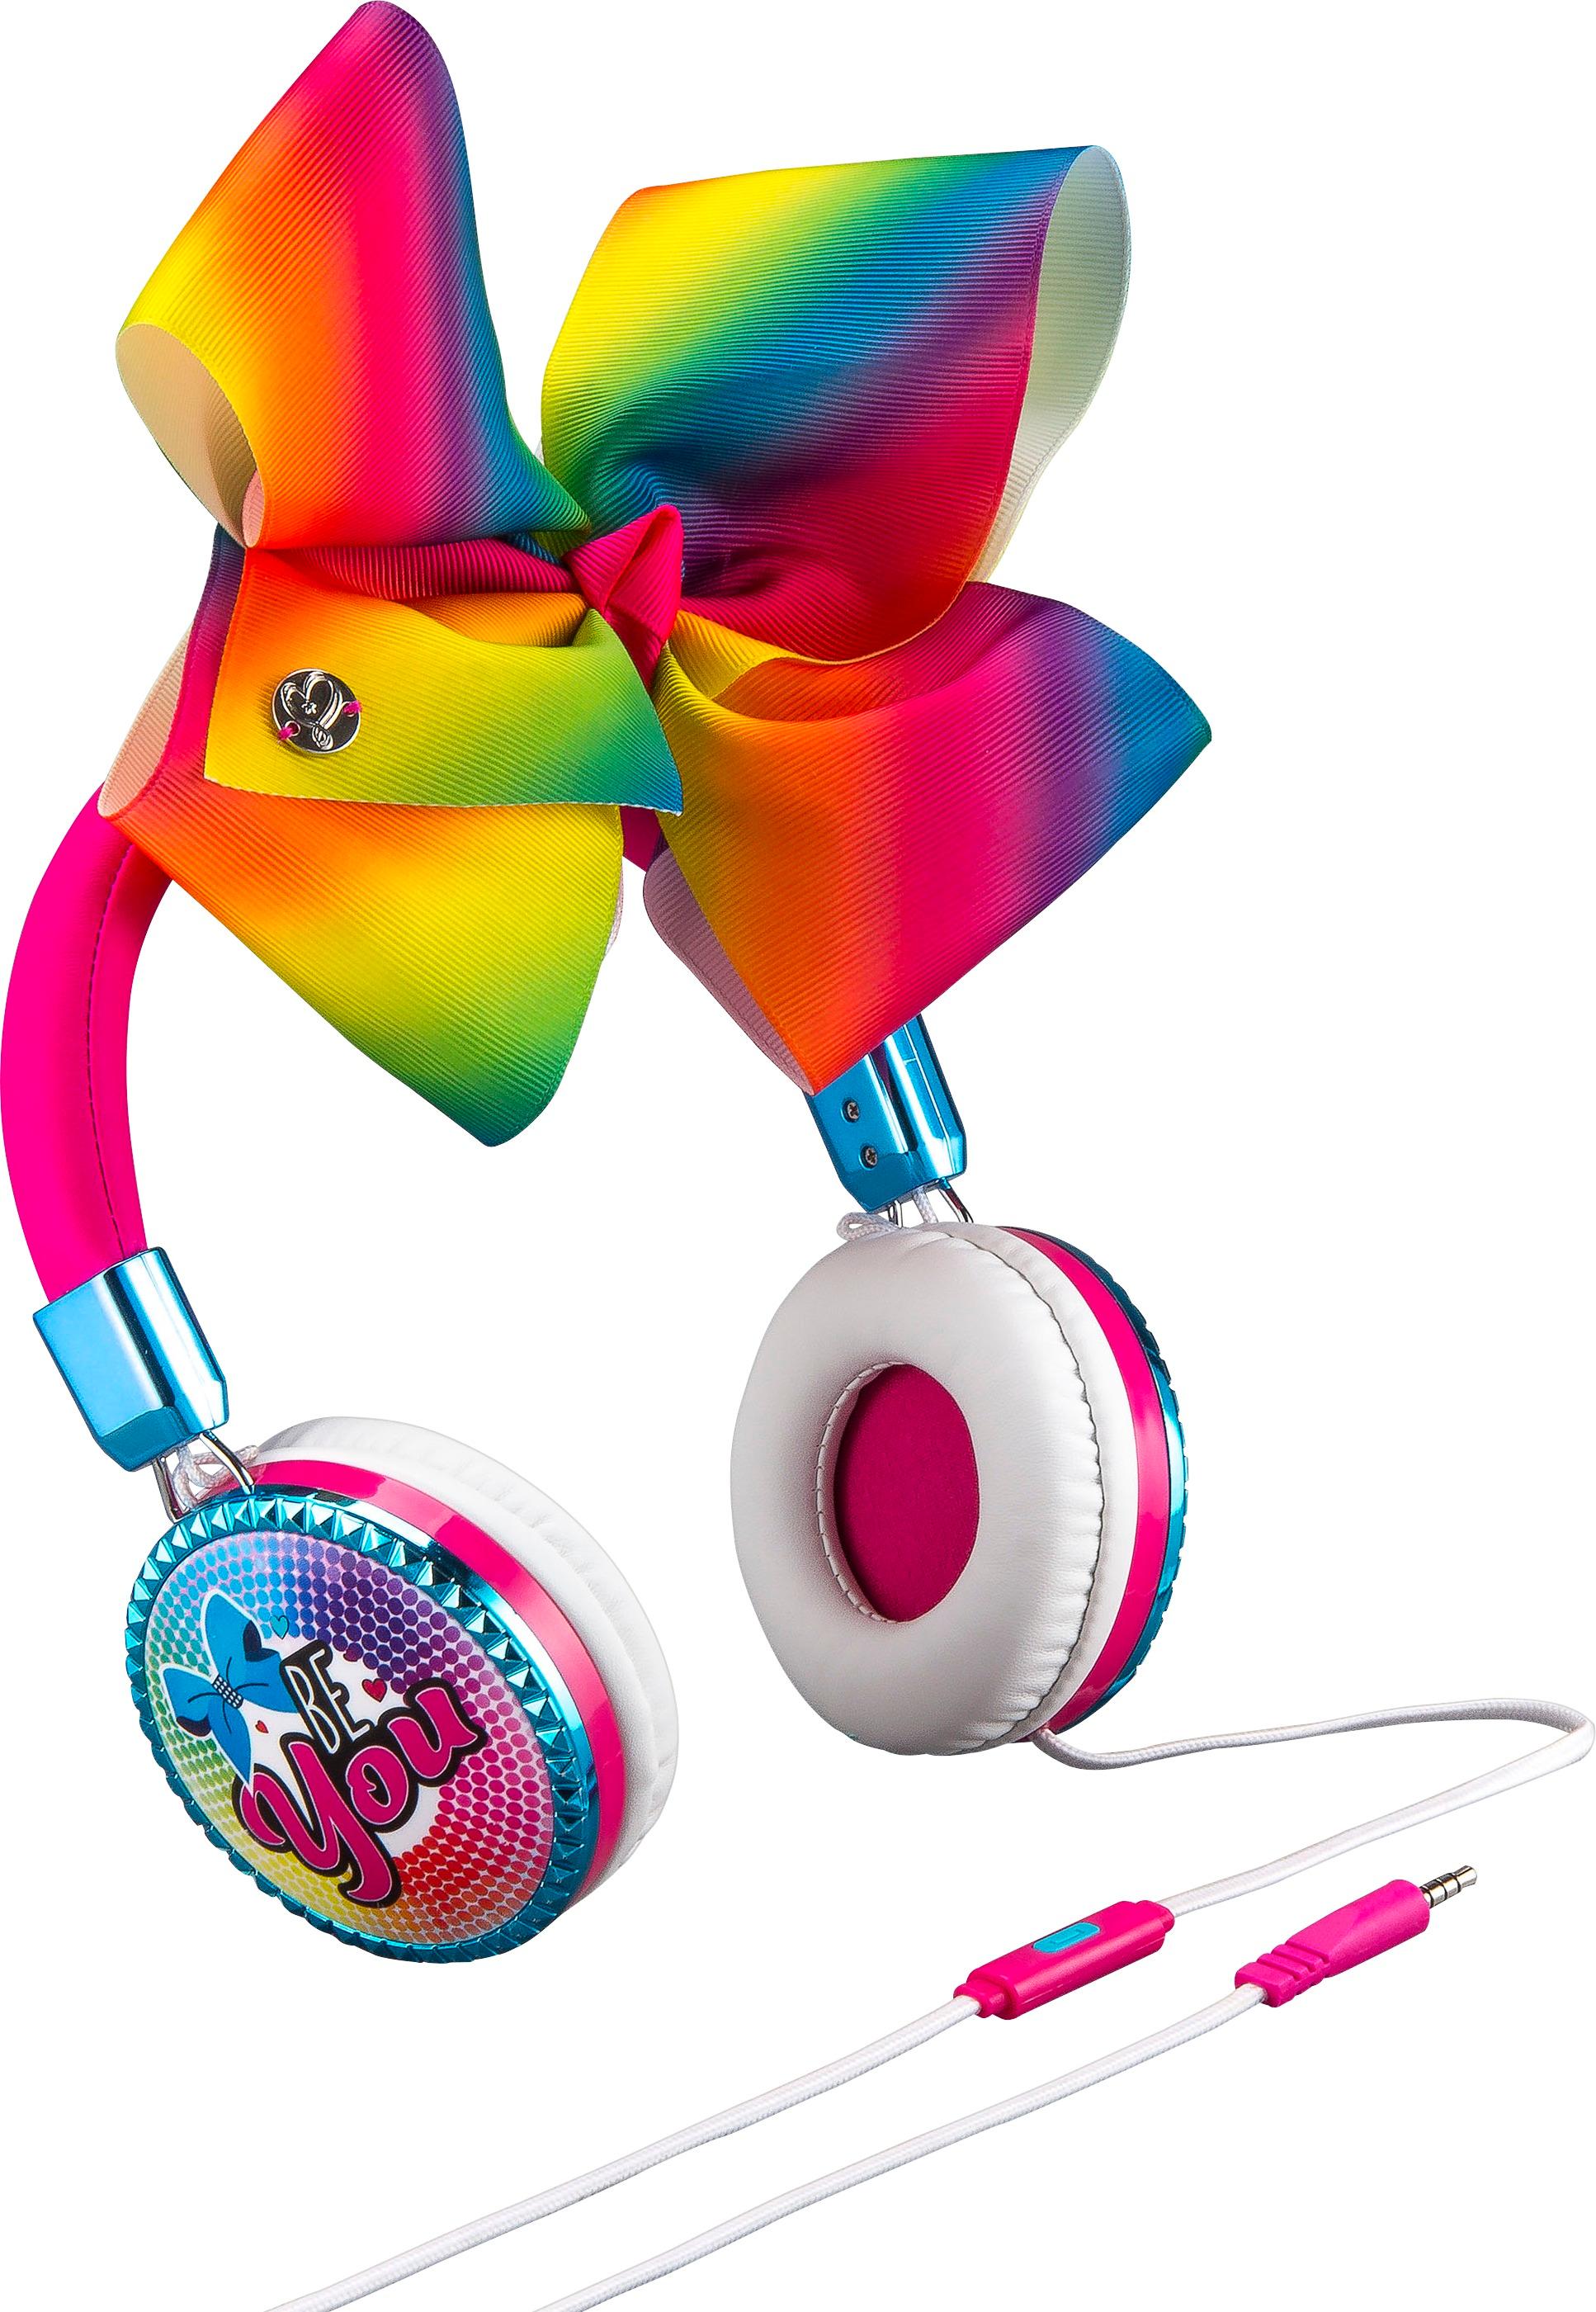 Angle View: eKids - JoJo Siwa Wired On-Ear Headphones - White/Blue/Yellow/Green/Pink